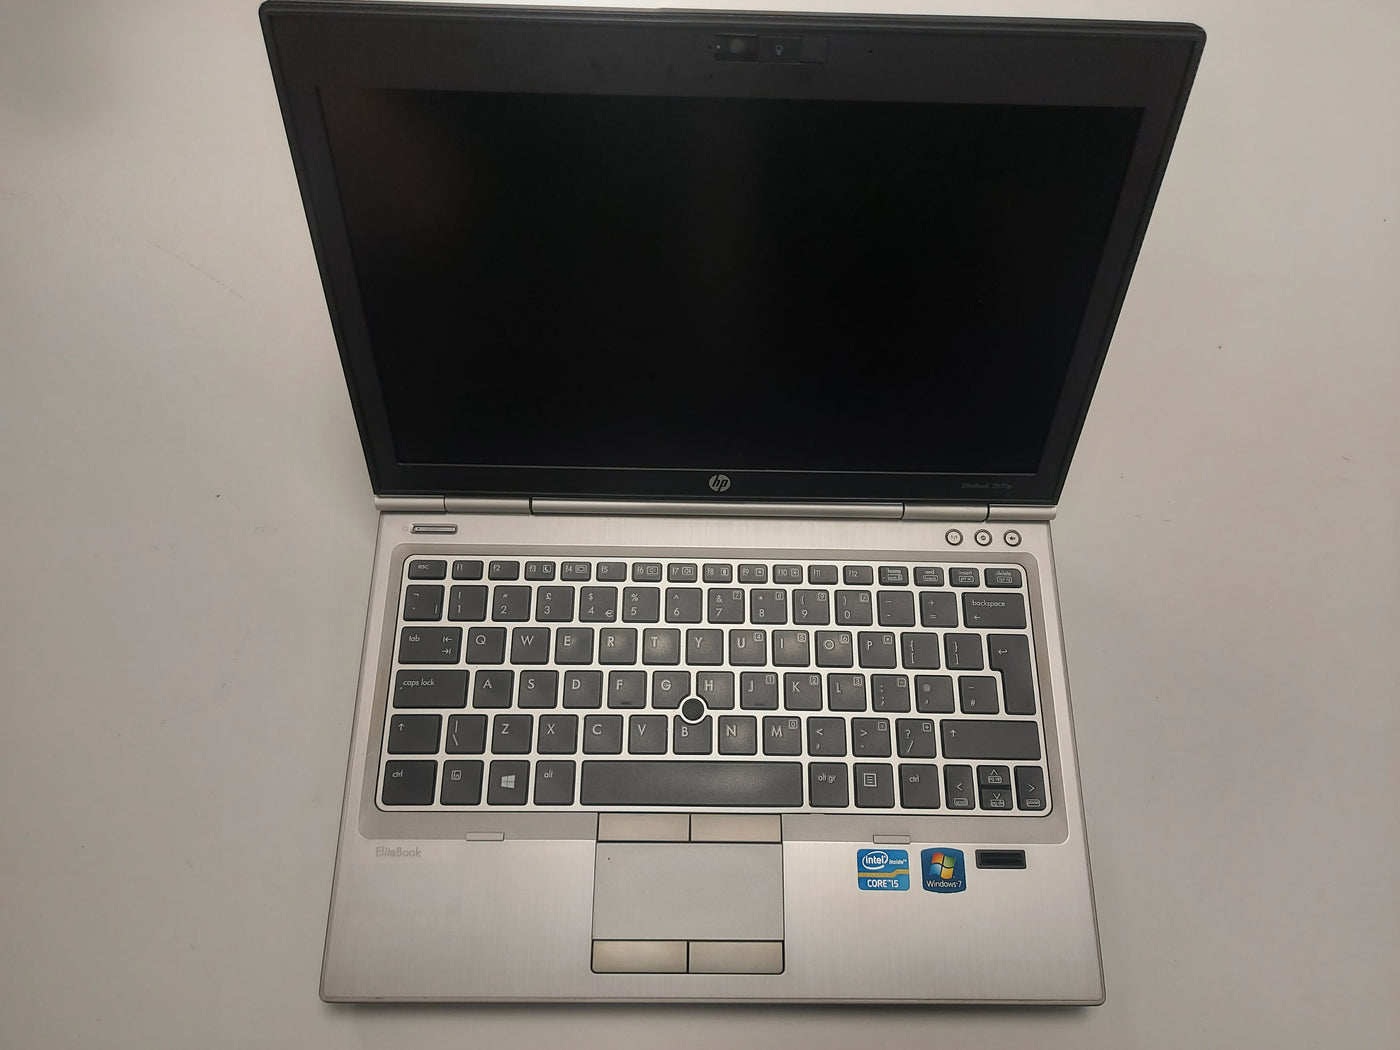 HP EliteBook 2570p 320GB HDD Core i5-3230M 2600MHz 4GB RAM 12.5" Laptop ( 2570p ) USED 